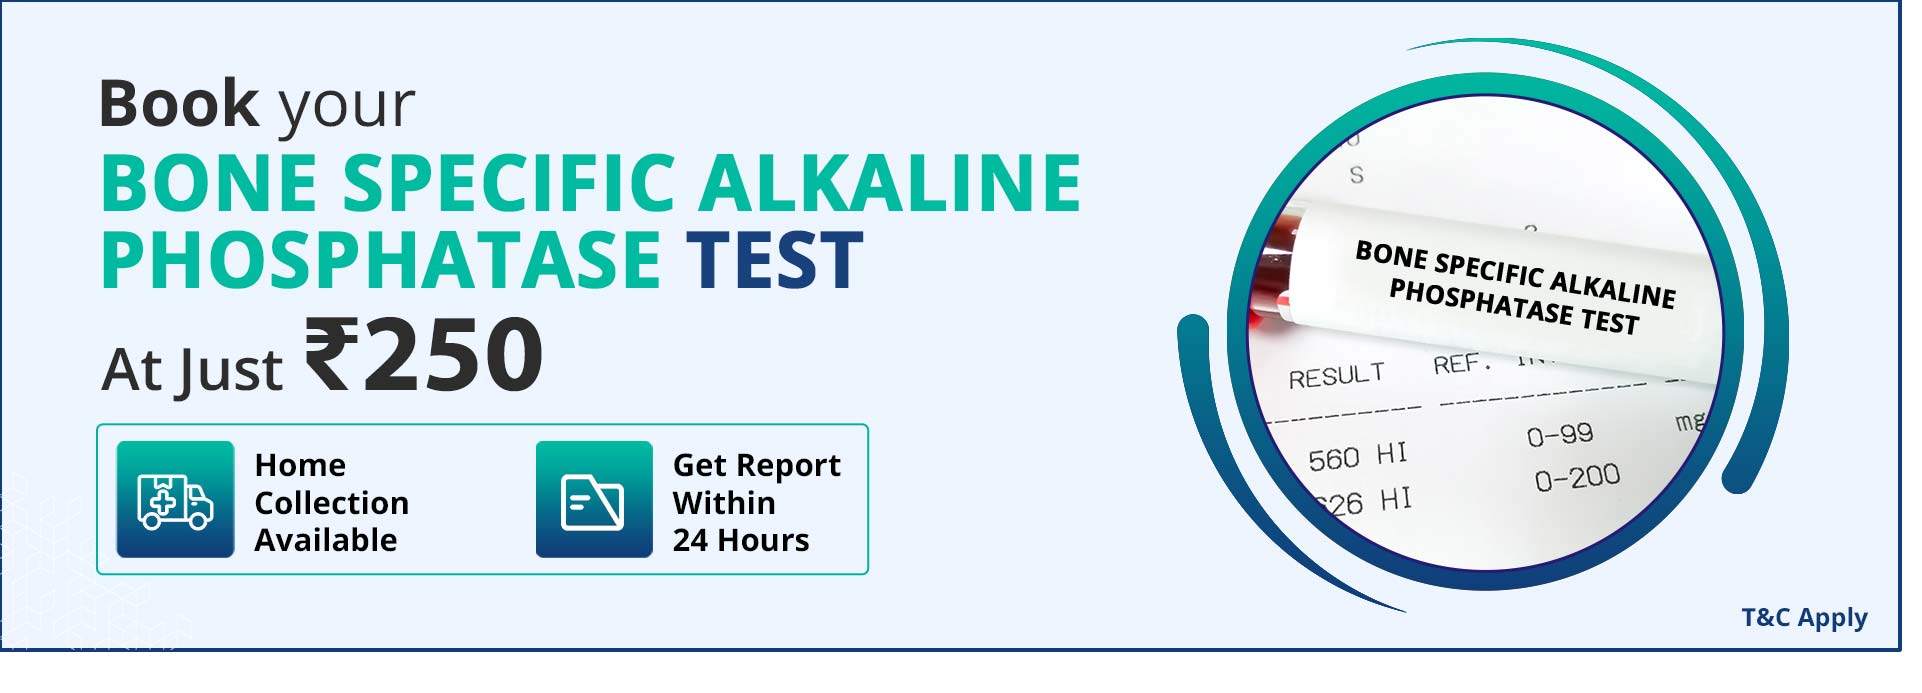 Bone specific alkaline phosphatase test